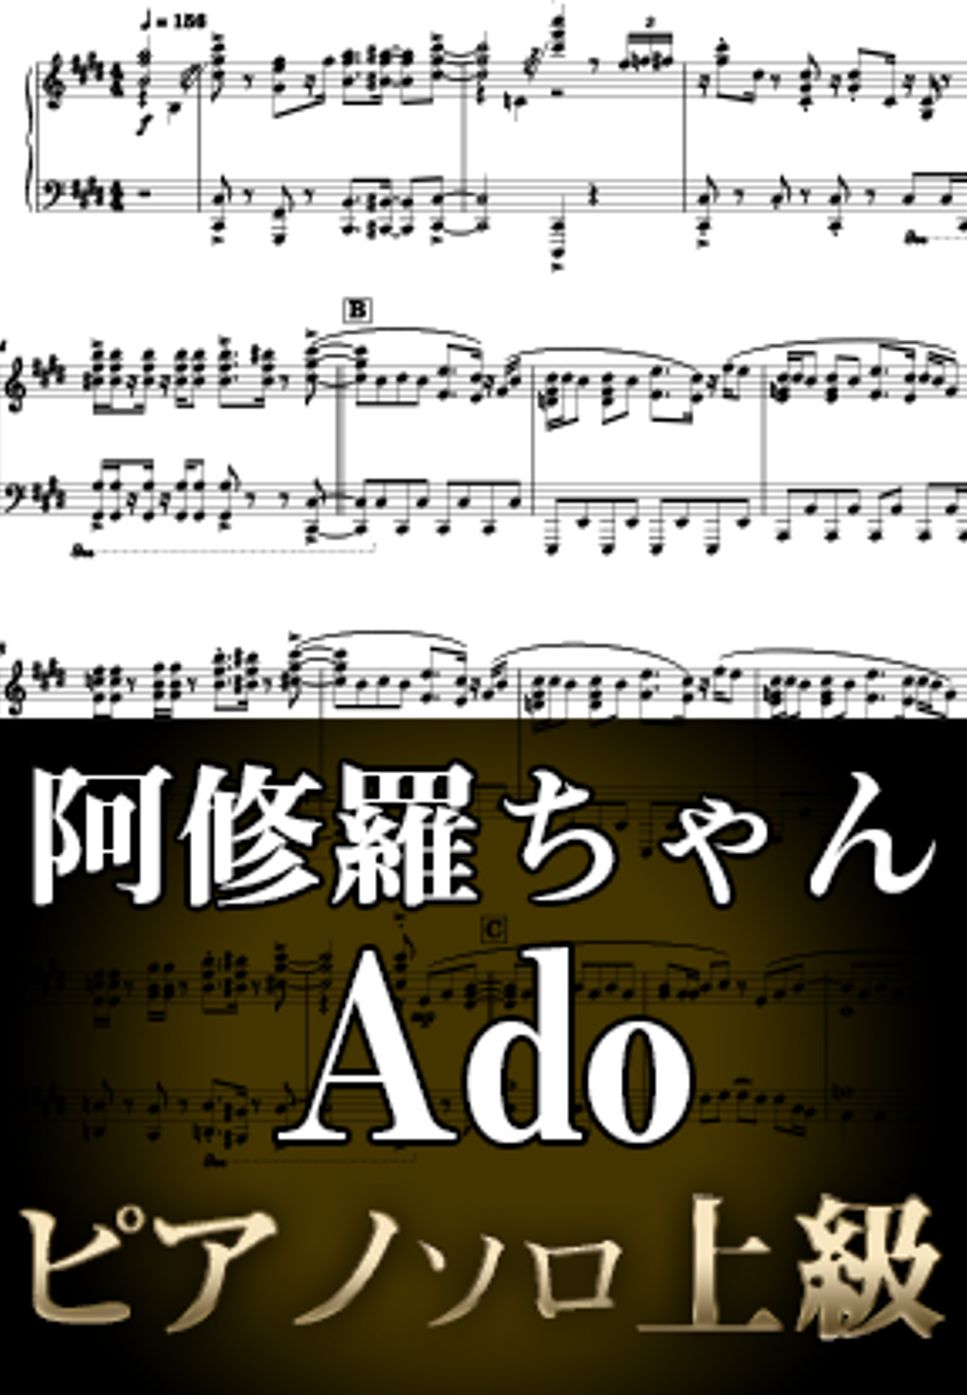 Ado - 阿修羅ちゃん (ピアノソロ上級  / ドラマ『ドクターX～外科医・大門未知子～』主題歌) by Suu